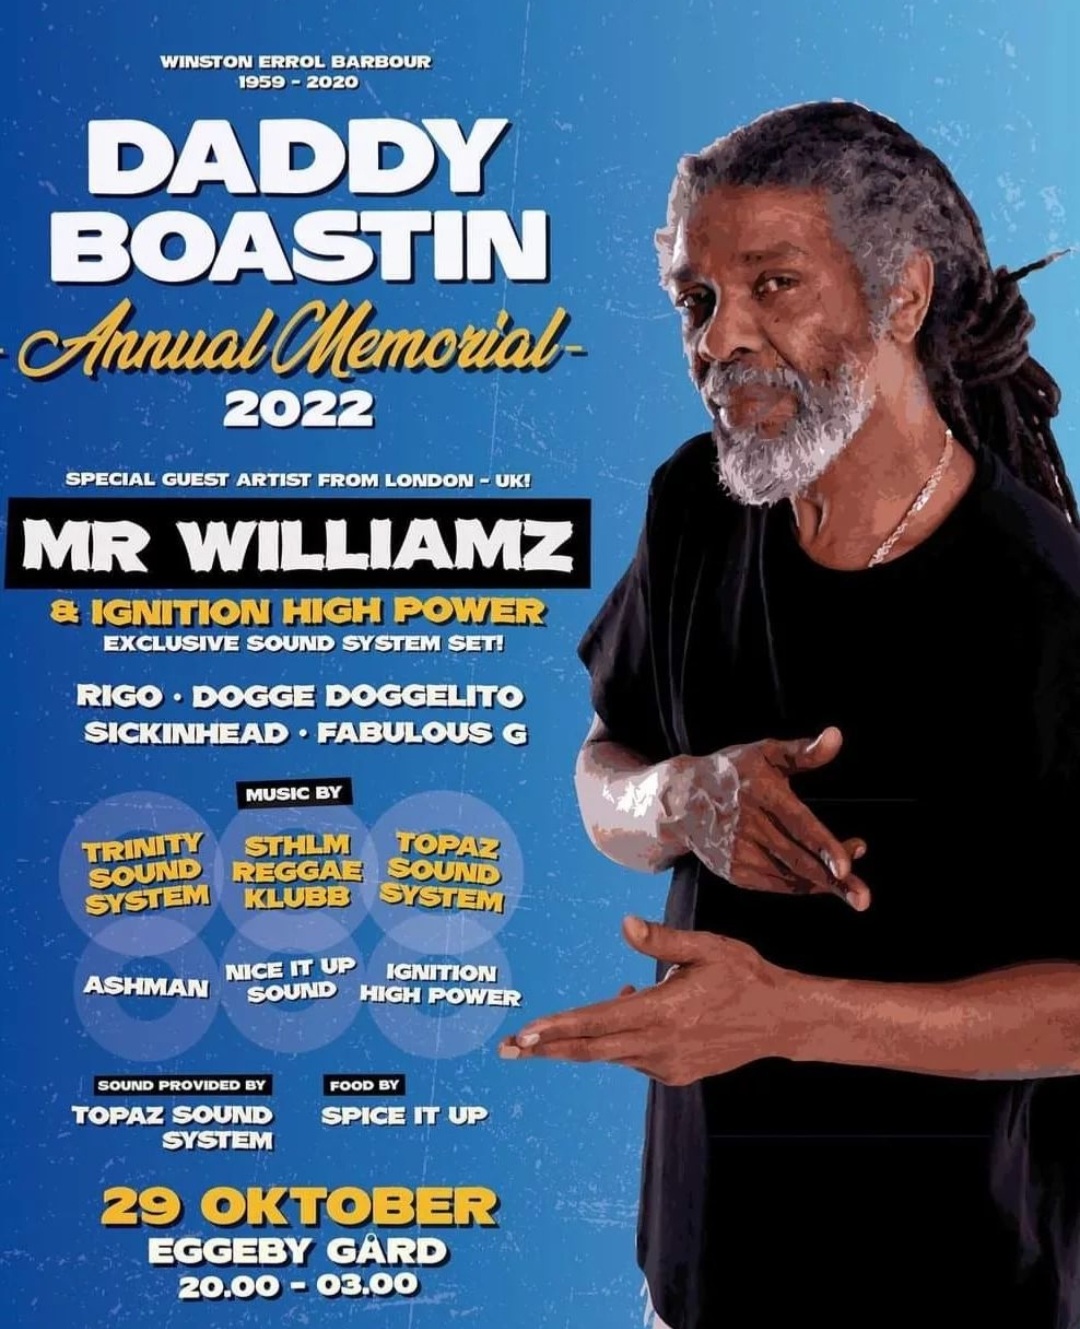 EVENEMANG! Daddy Boastin Annual Memorial!